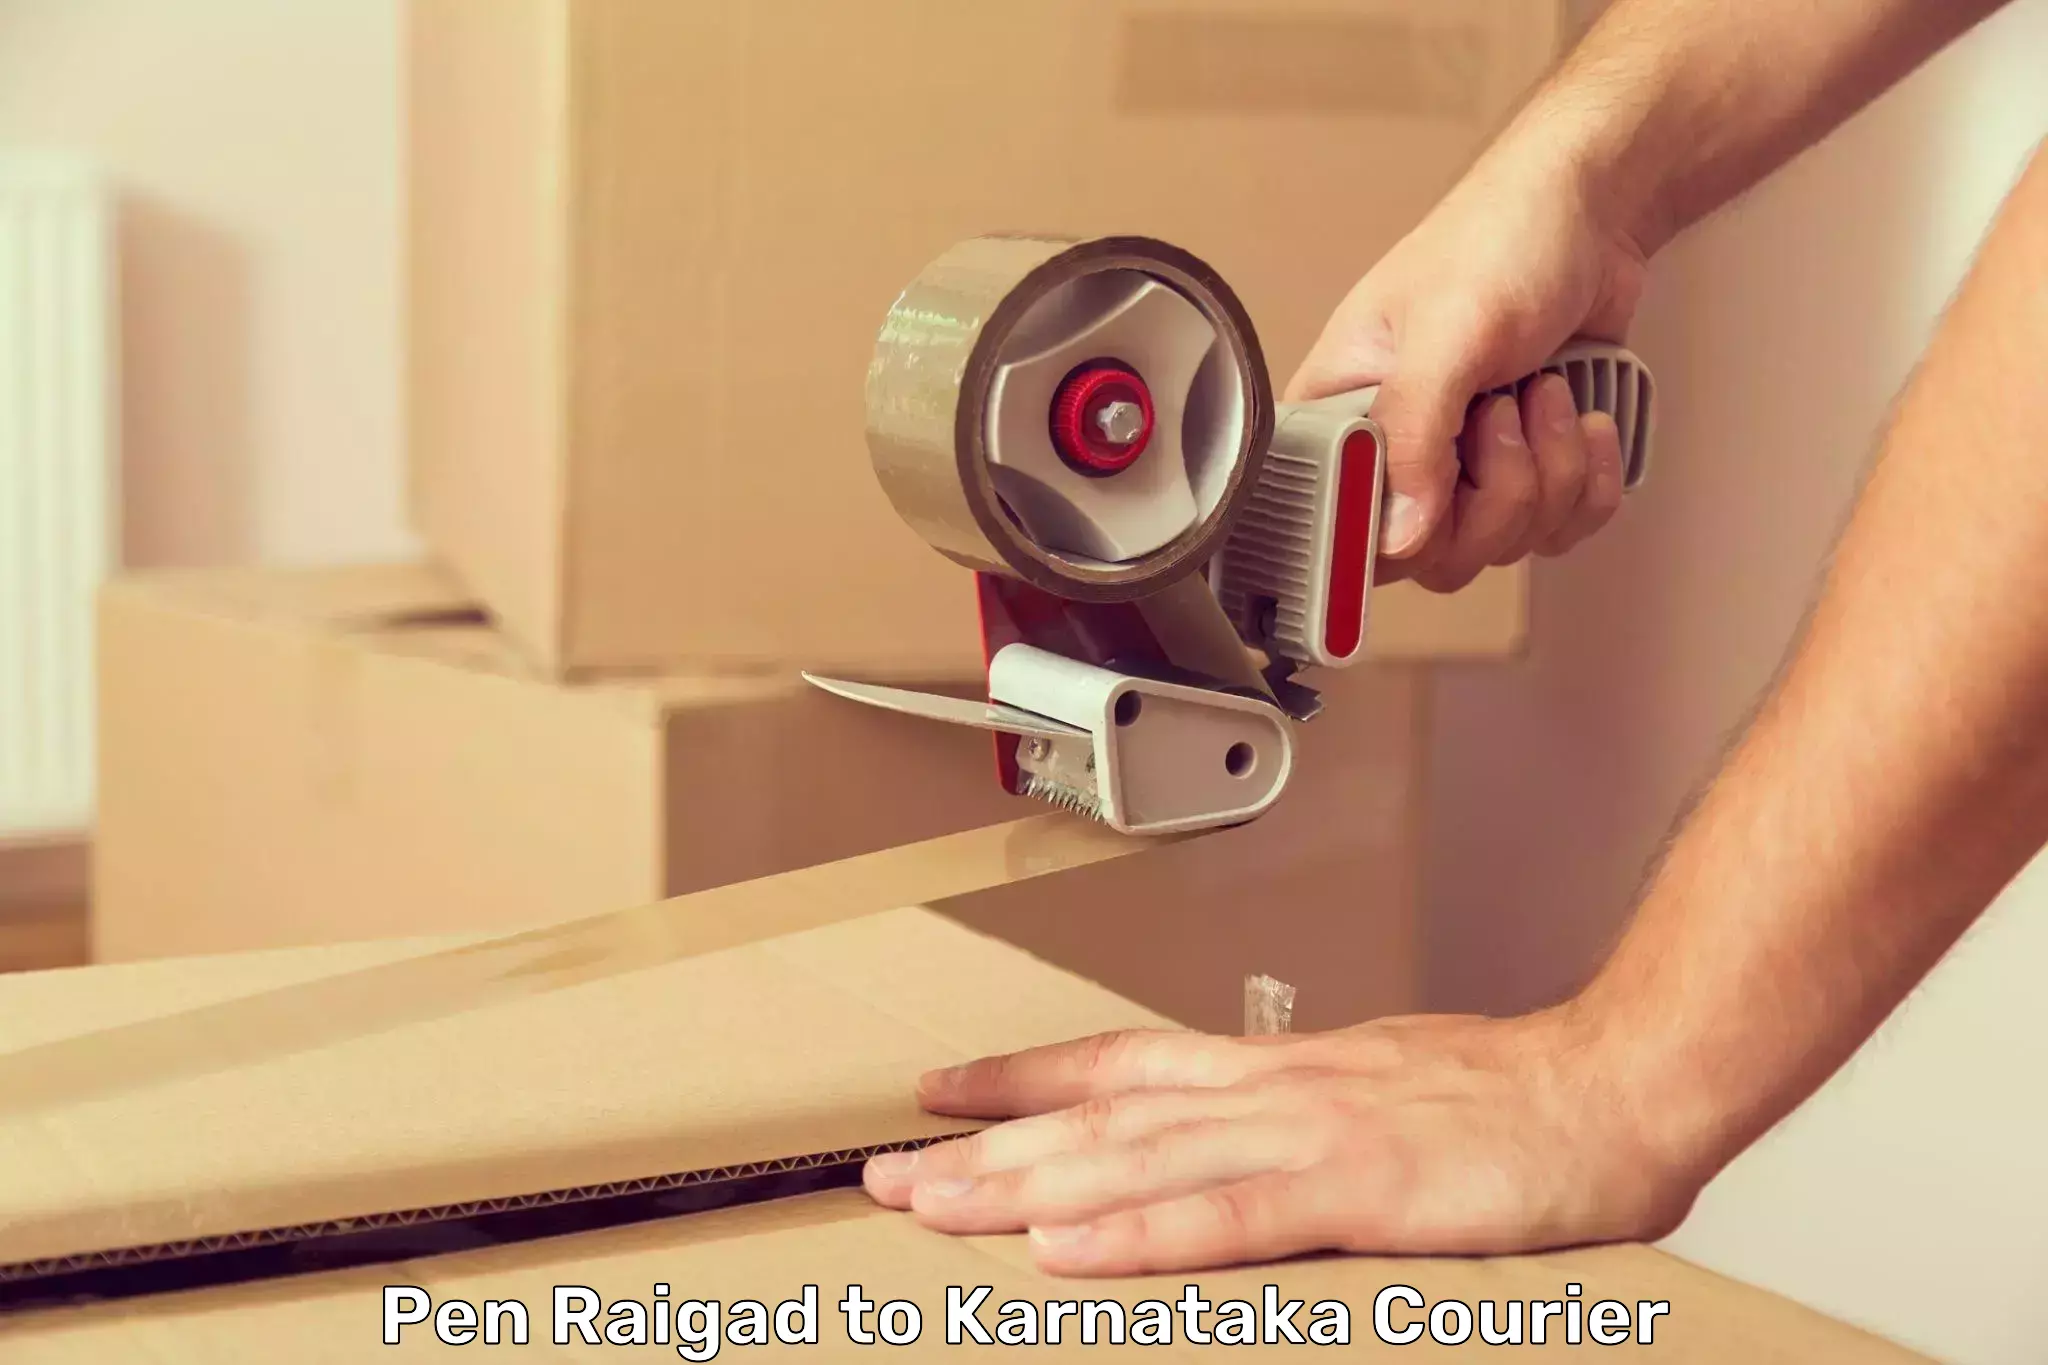 Custom courier packaging Pen Raigad to Karnataka